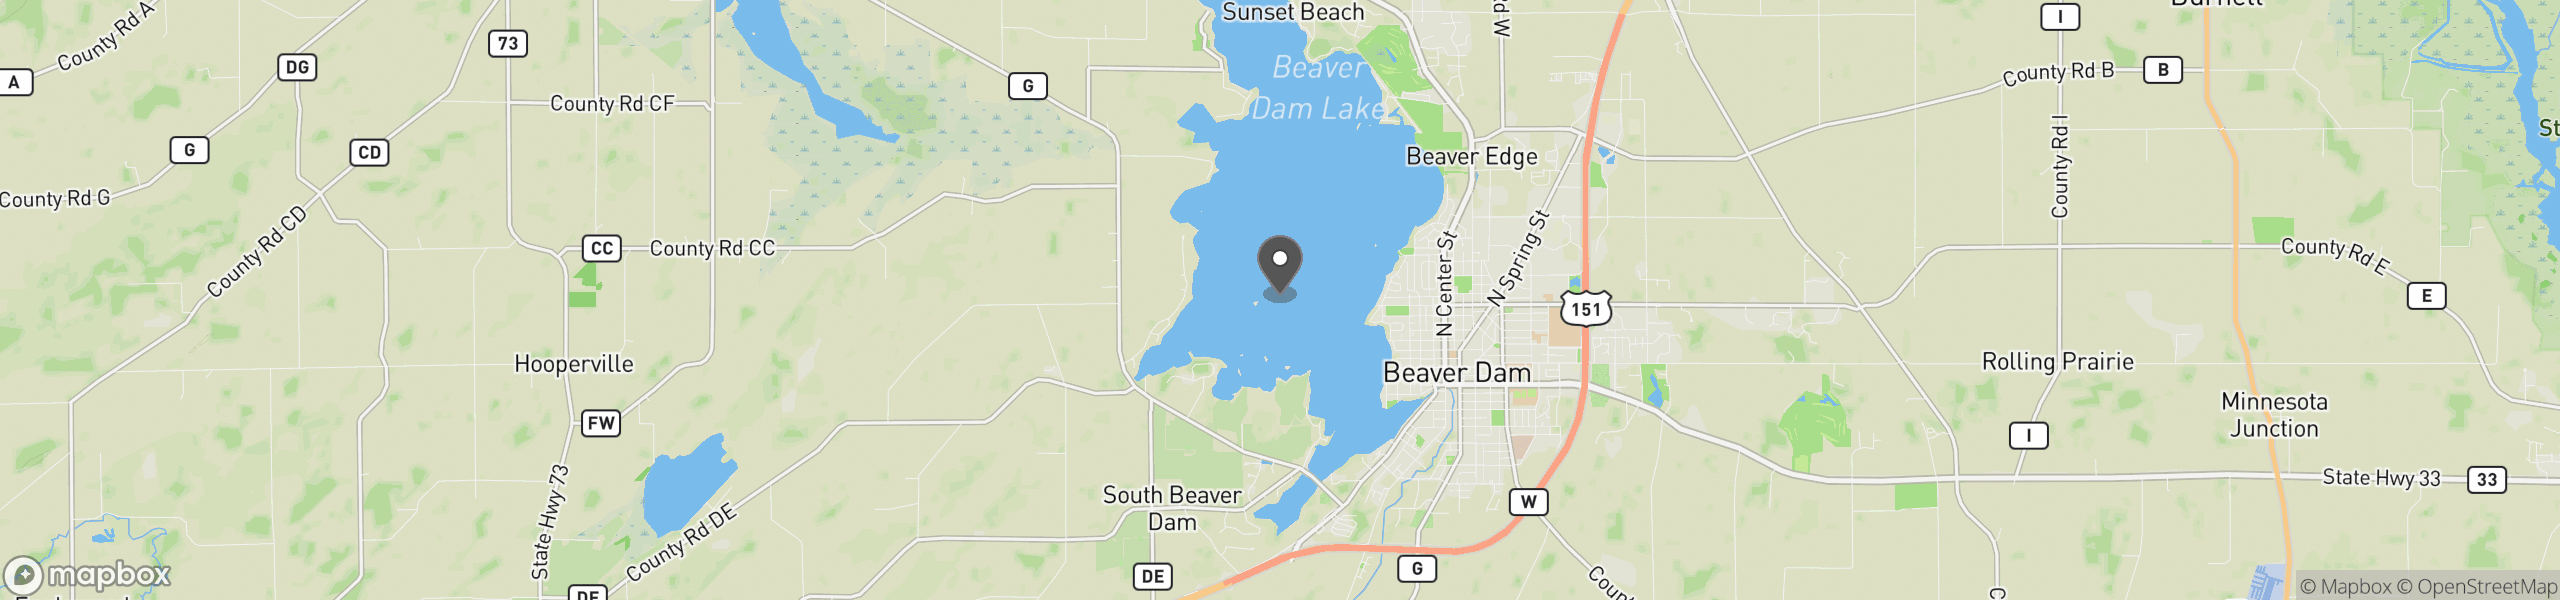 Beaver Dam, WI